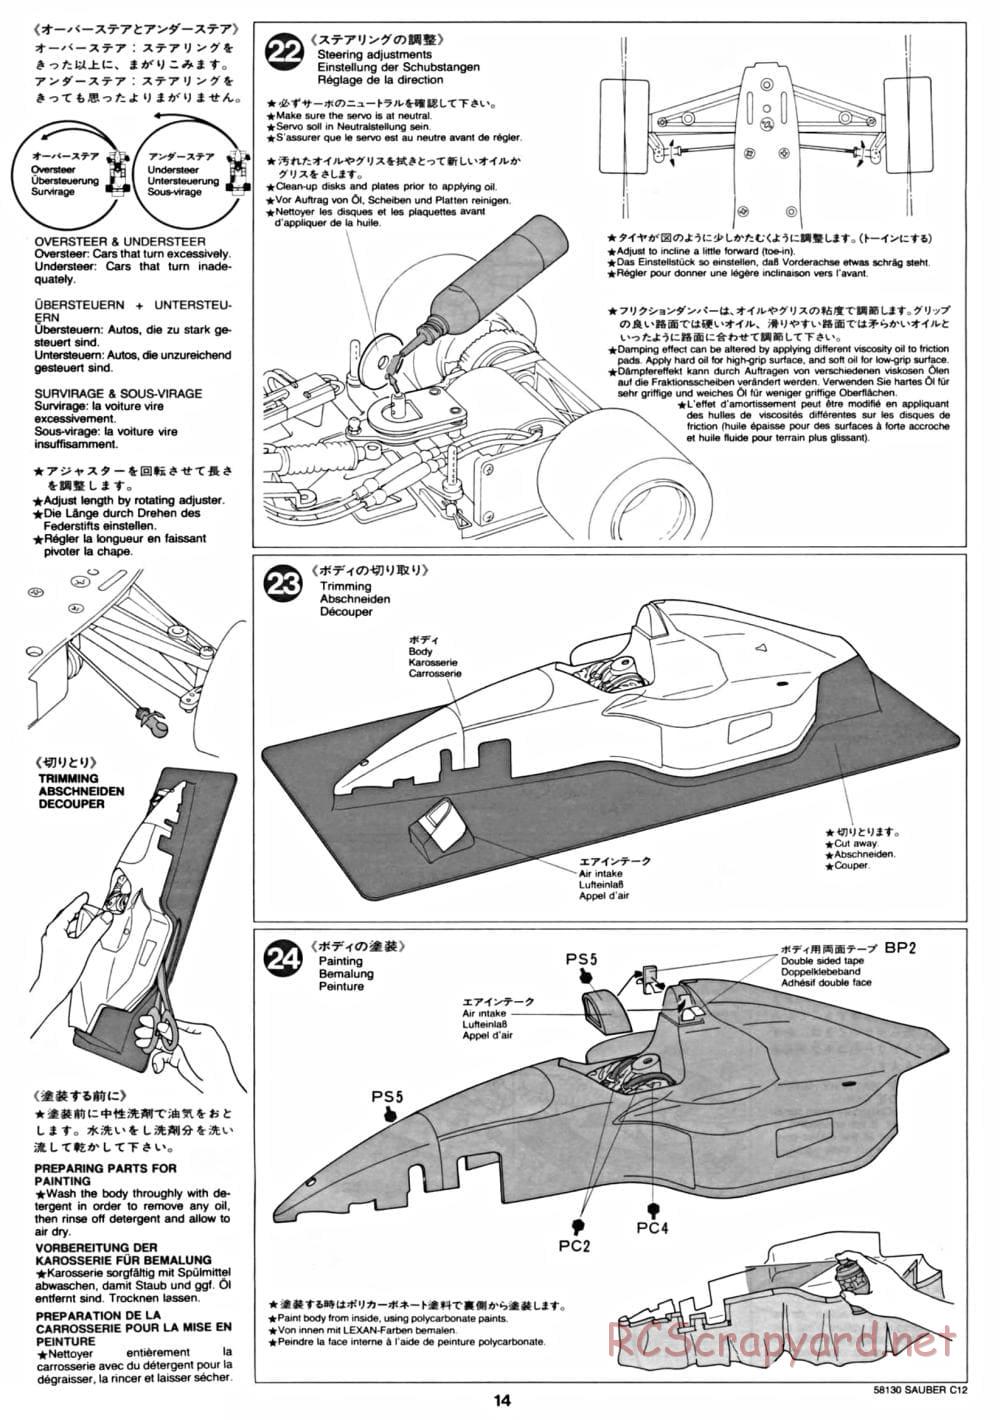 Tamiya - Sauber C12 - F103 Chassis - Manual - Page 14